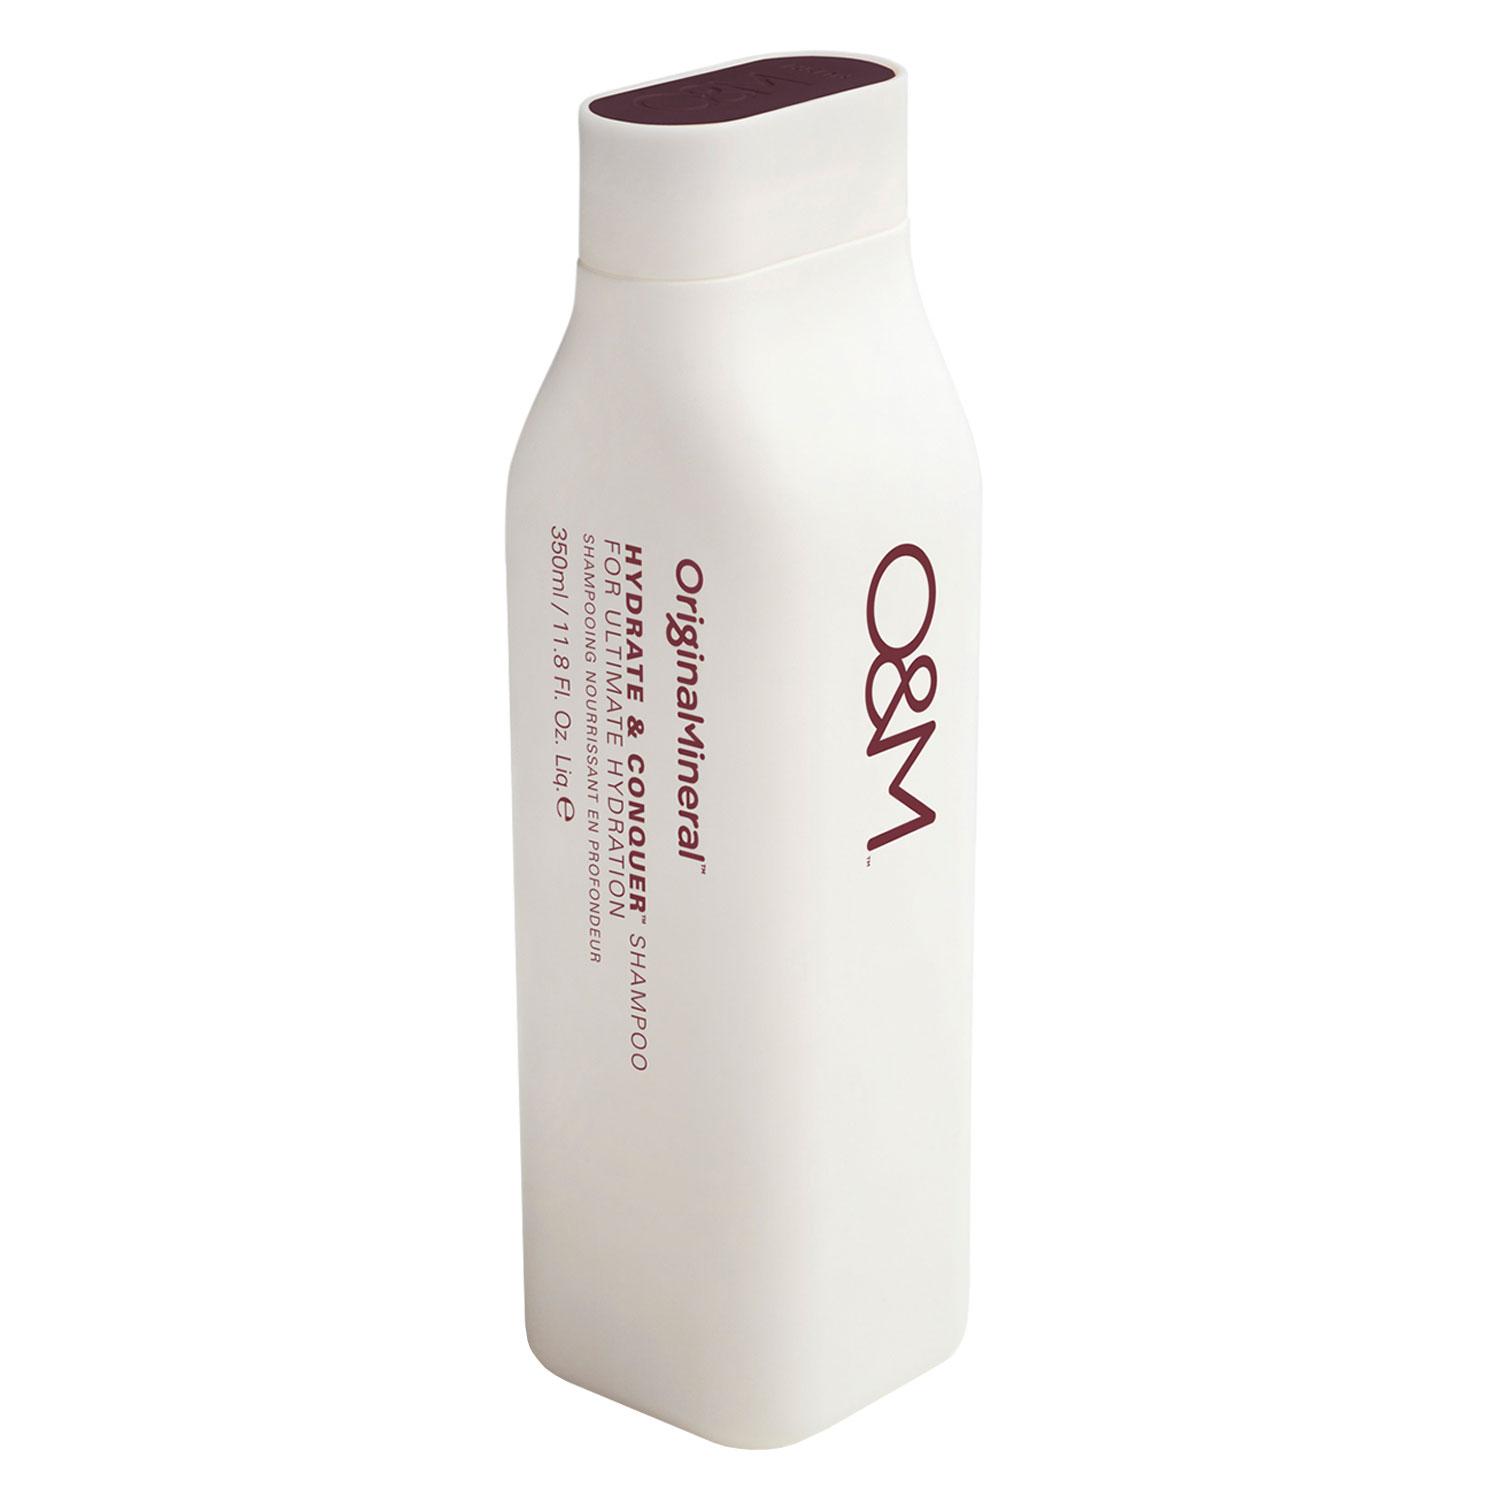 O&M Haircare - Hydrate & Conquer Shampoo